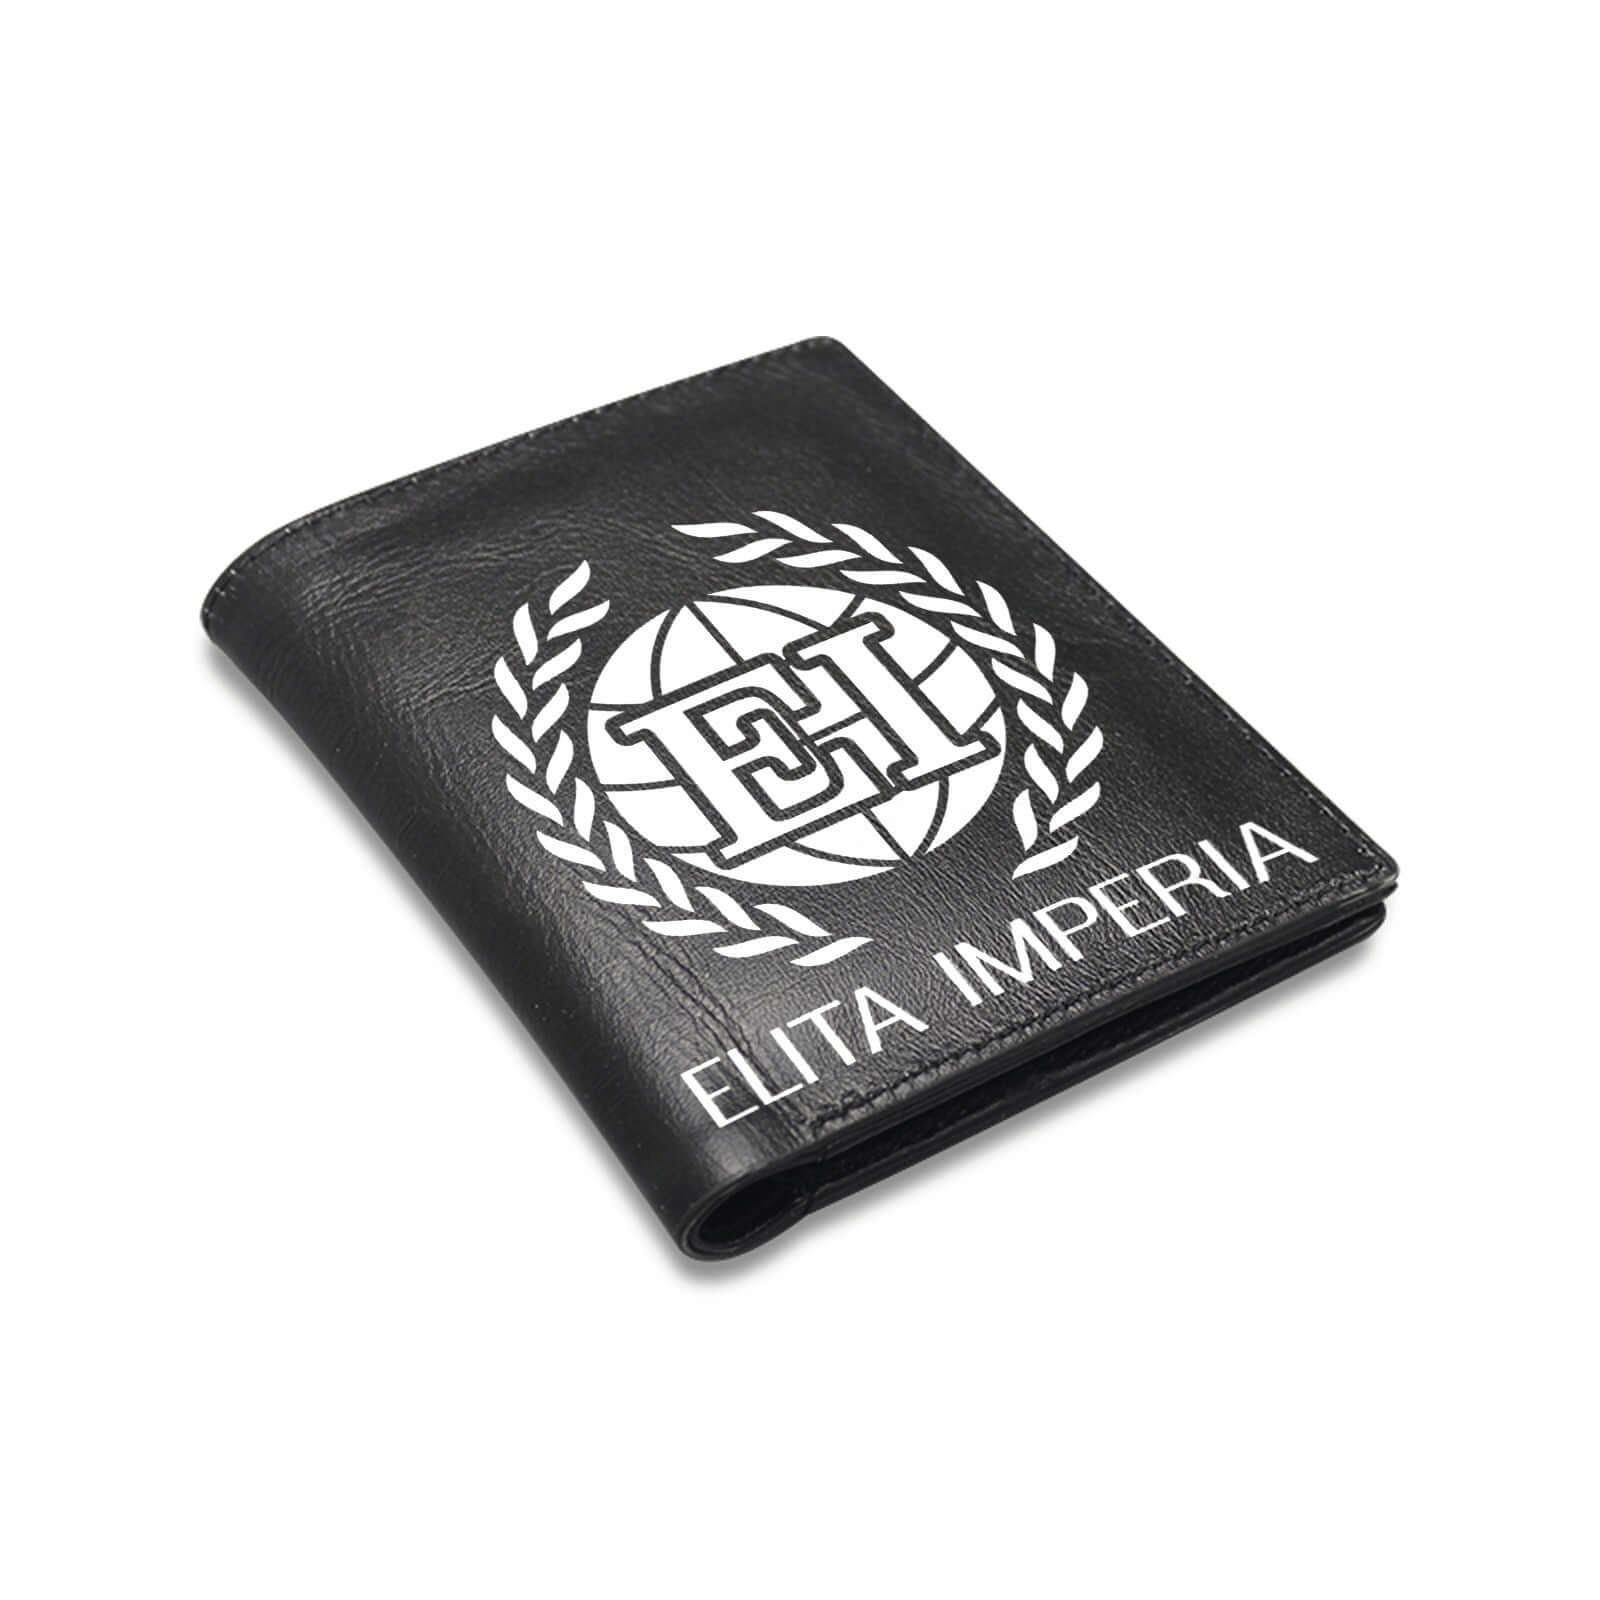 ELITA IMPERIA WORLD™ Men's Wallet - ELITA IMPERIA INC.